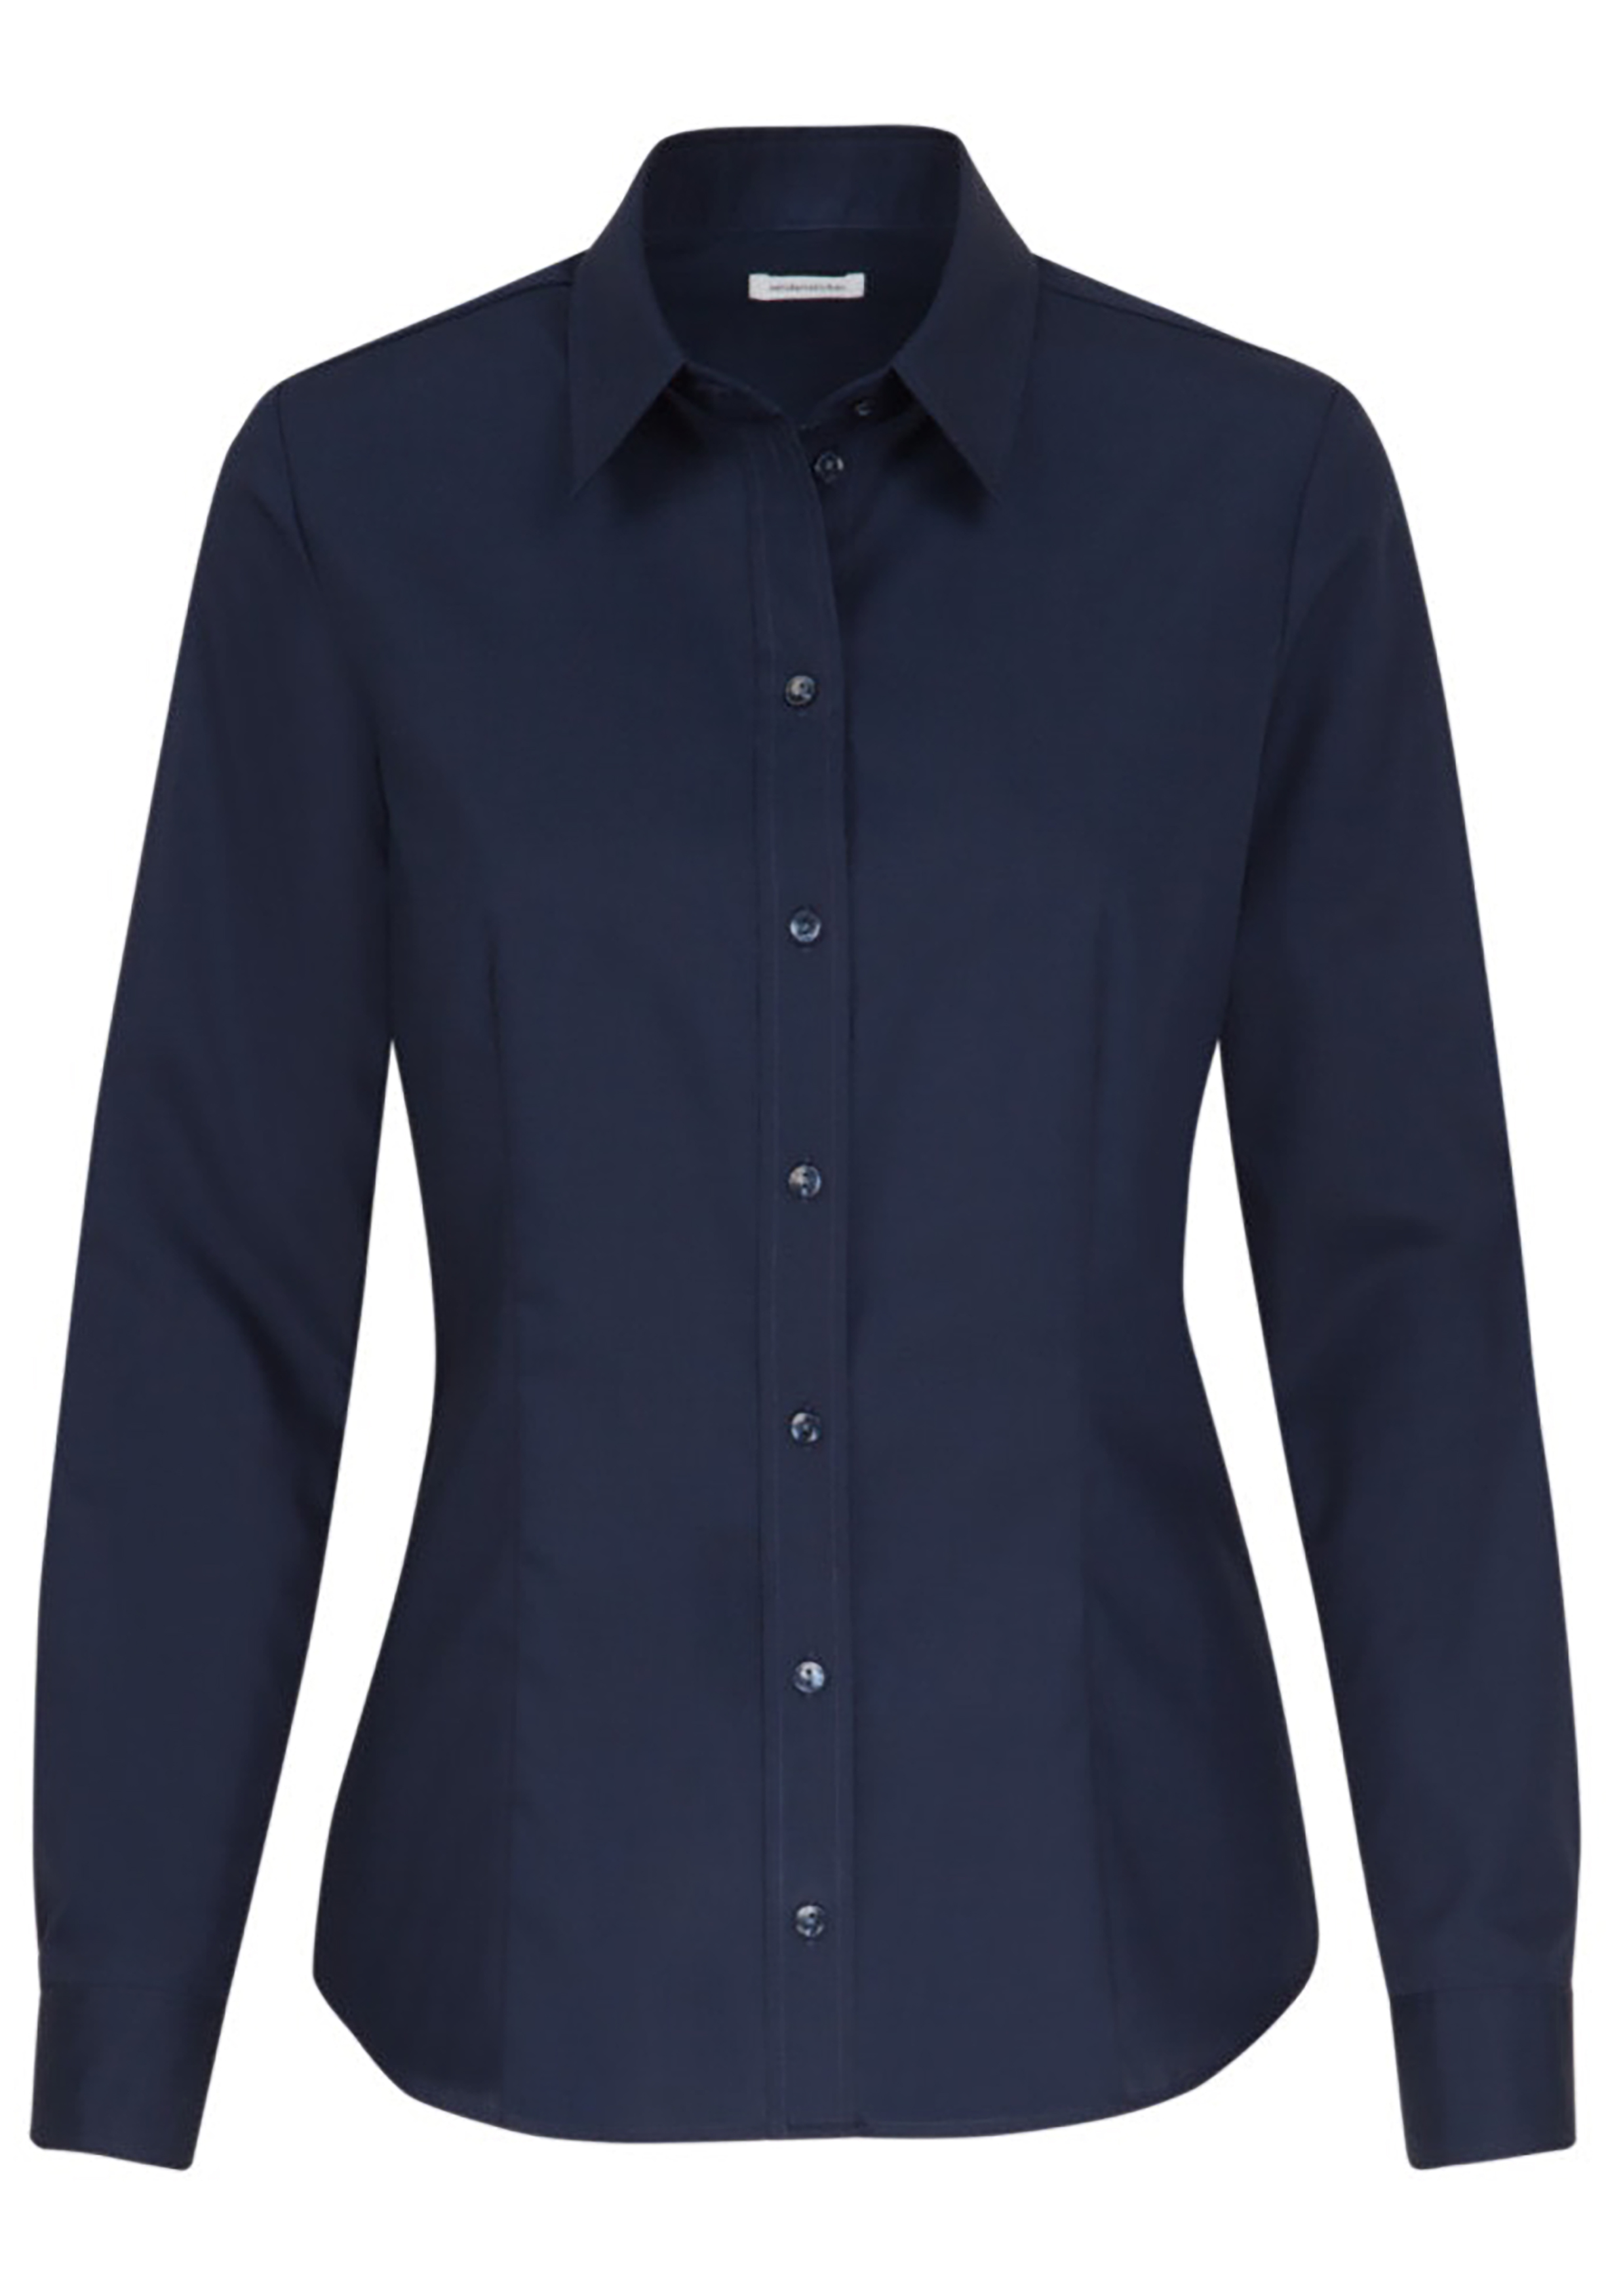 Seidensticker dames blouse regular fit, donkerblauw - Zomer 50% korting